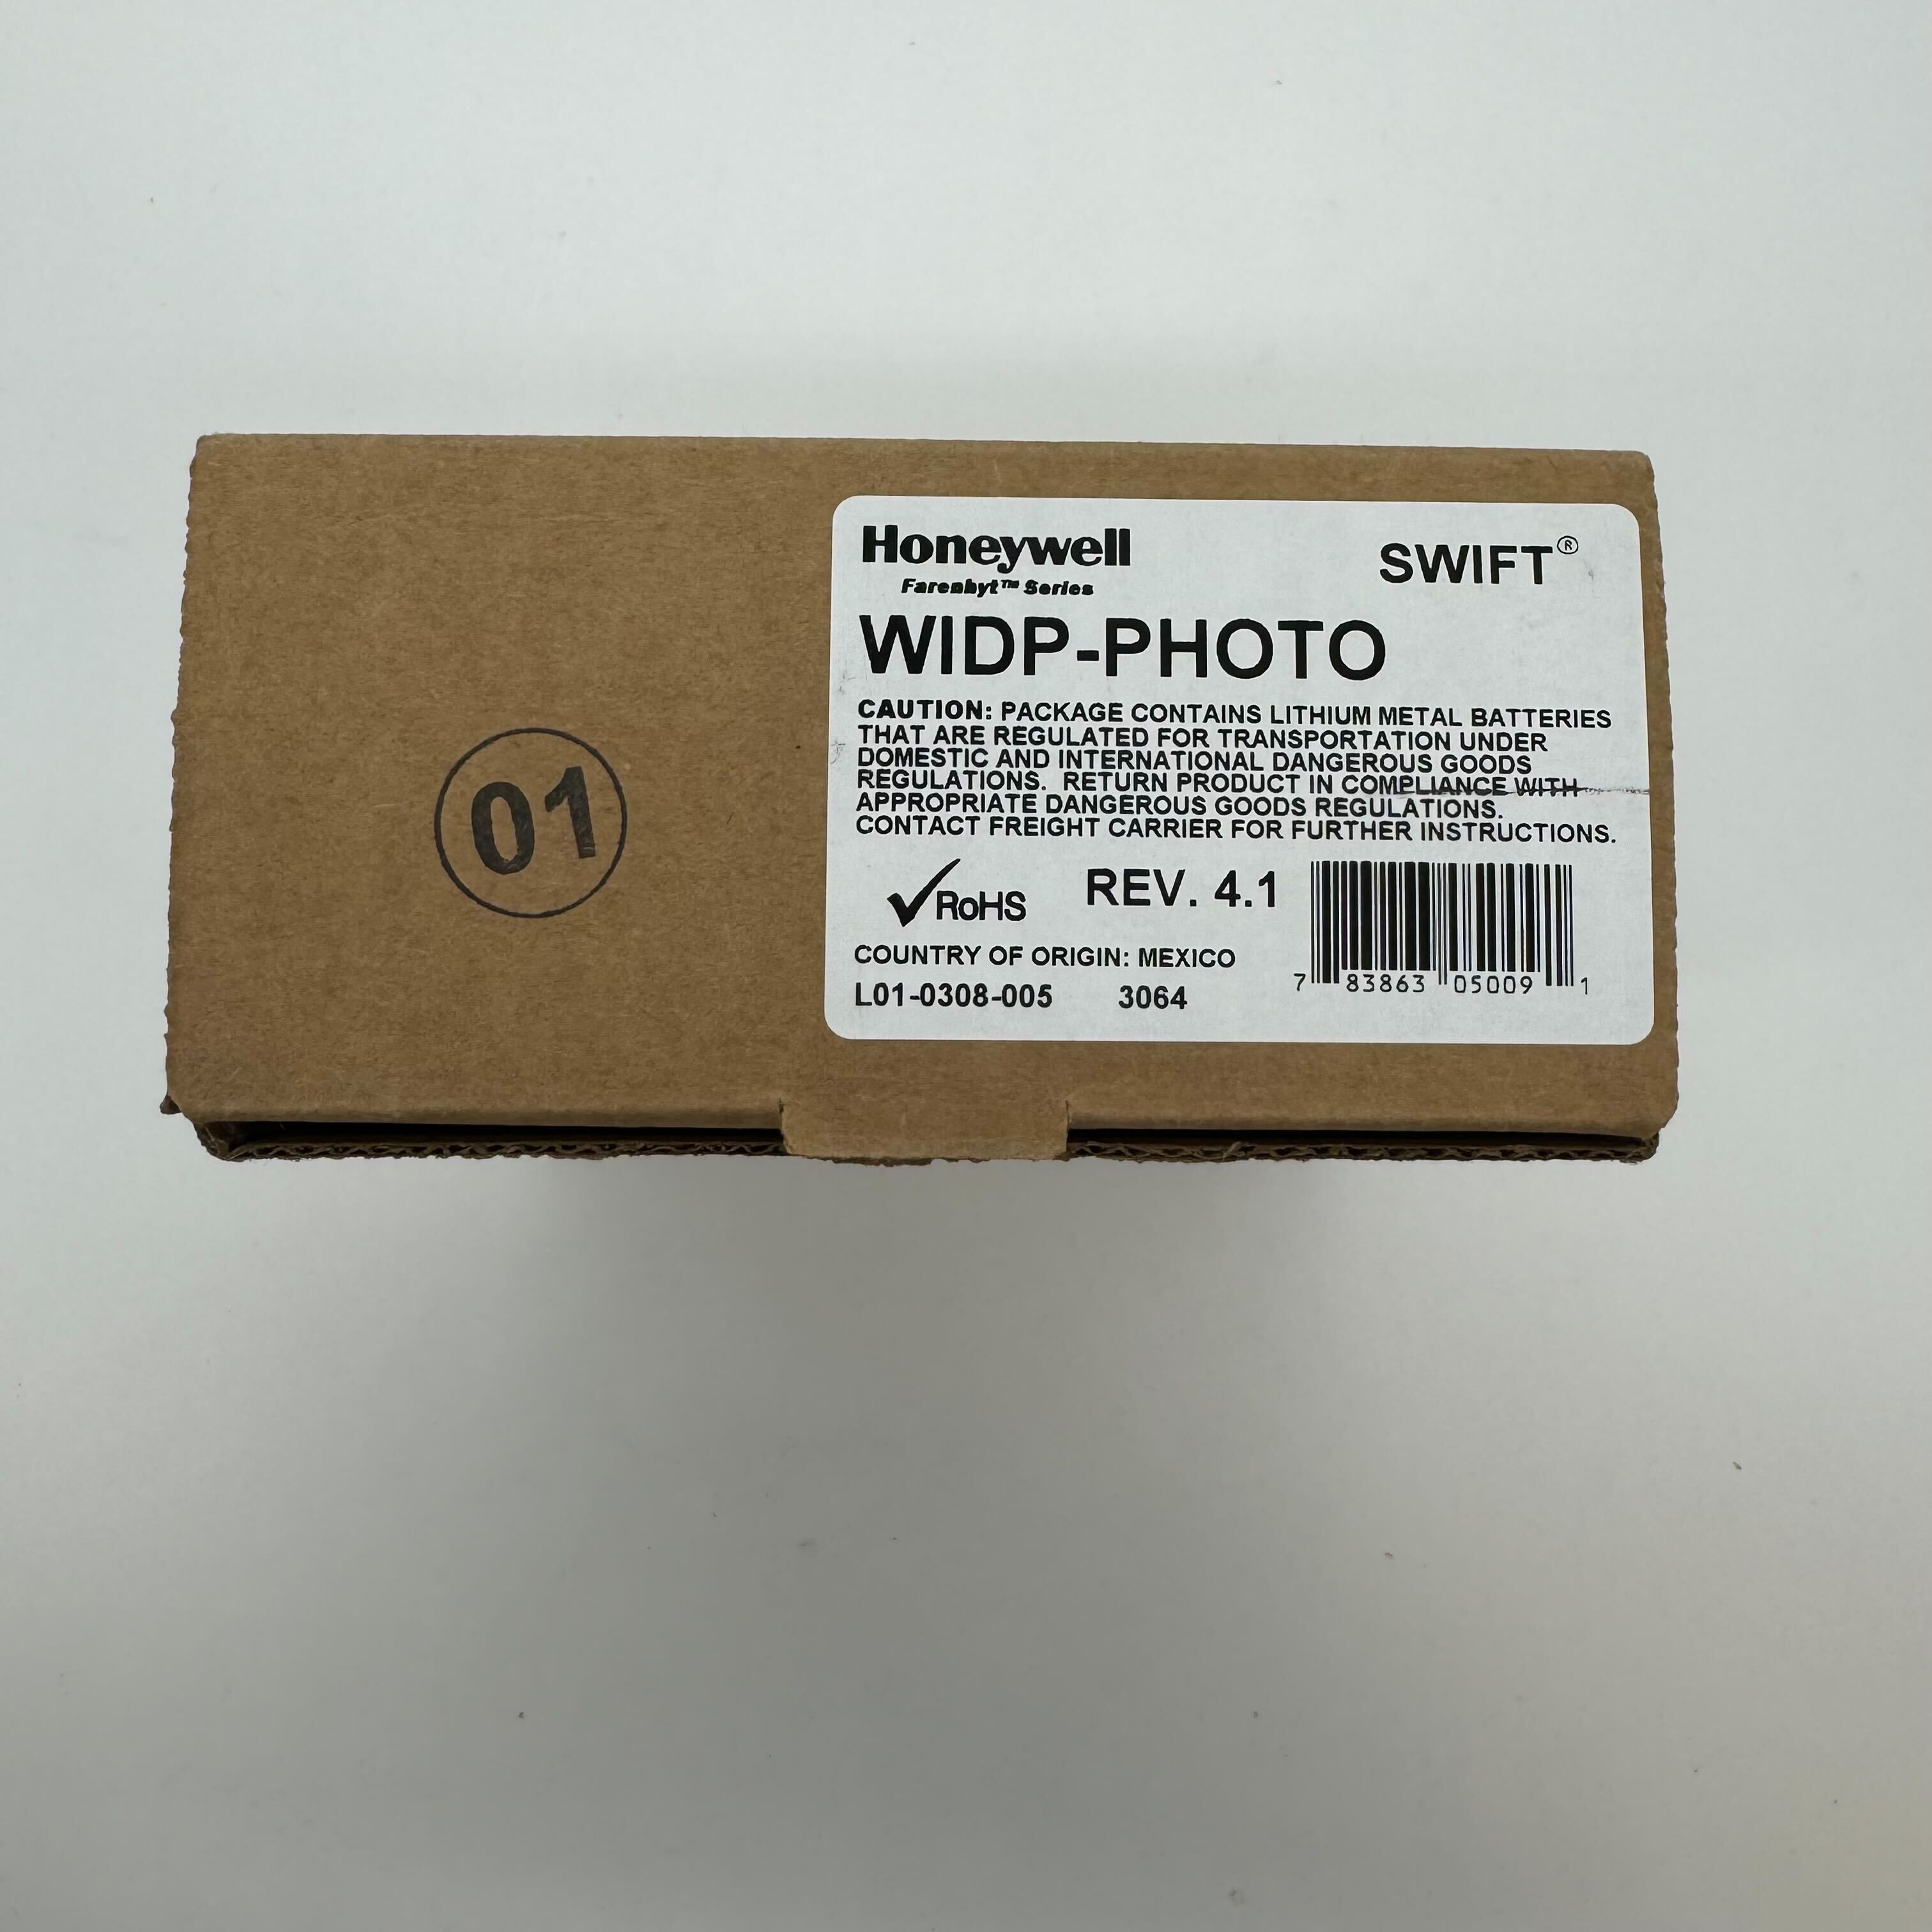 WIDP-PHOTO